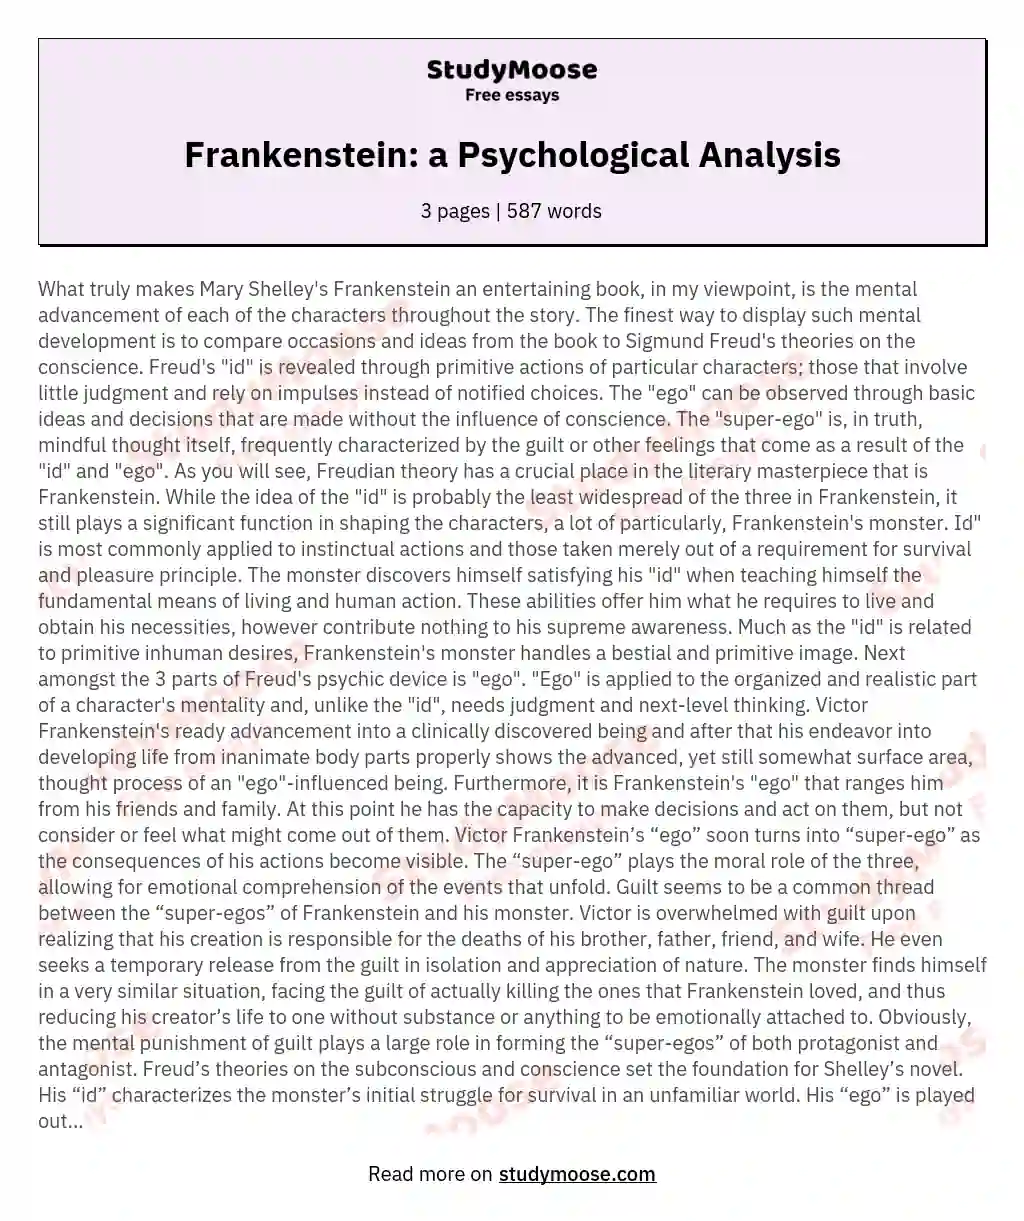 Frankenstein: a Psychological Analysis essay